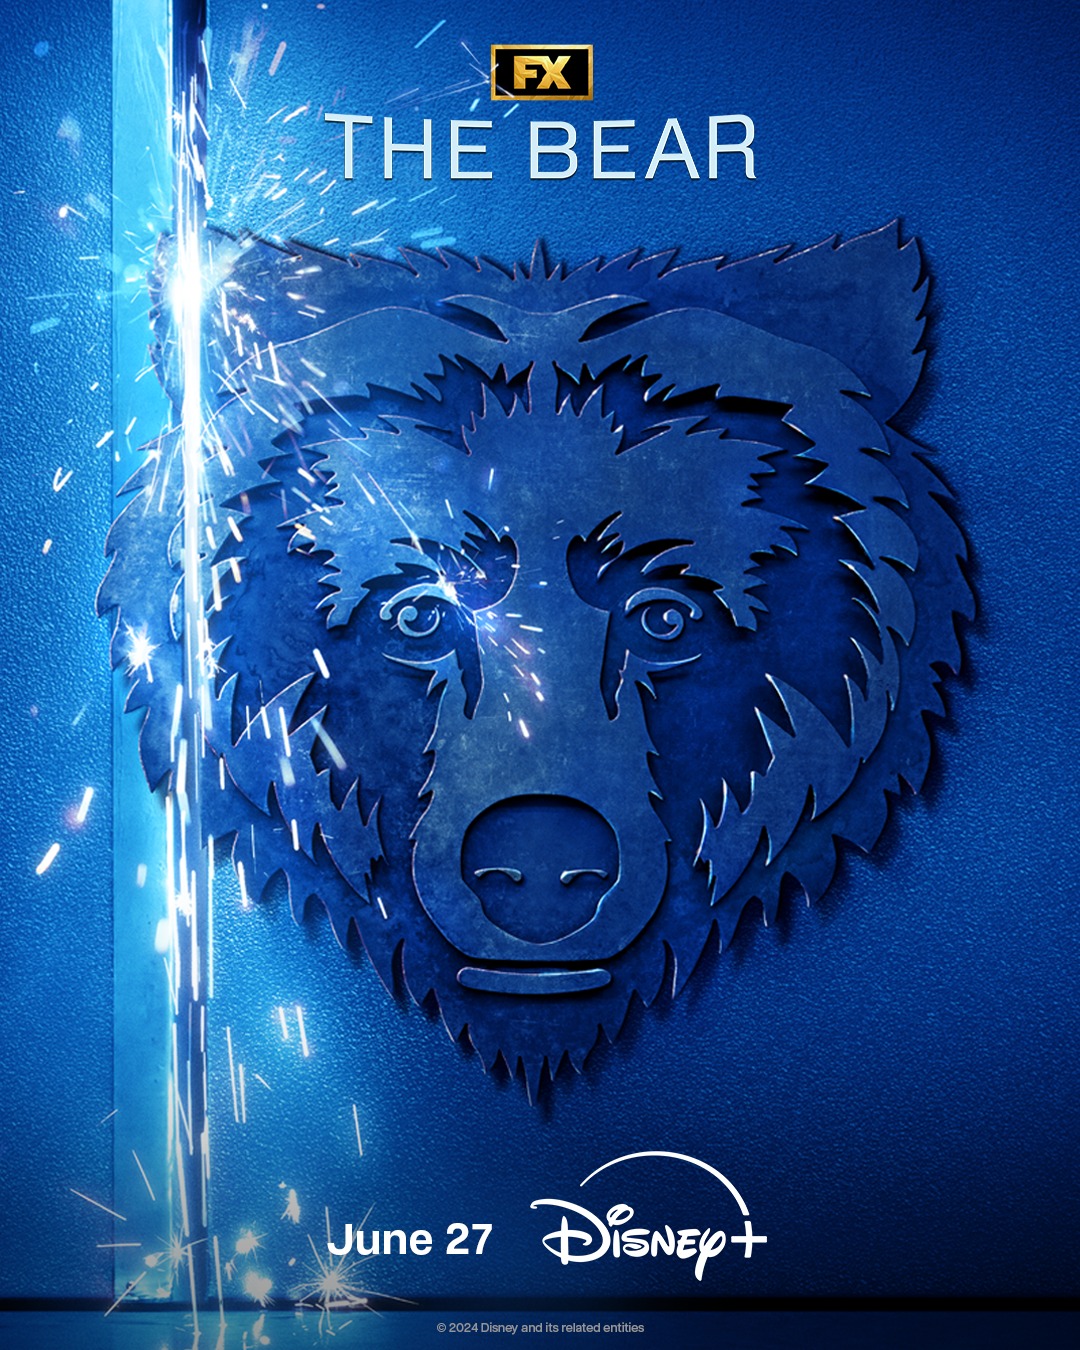 Yes Chef! ‘The Bear’ Season Three comes to Disney+ this June 27